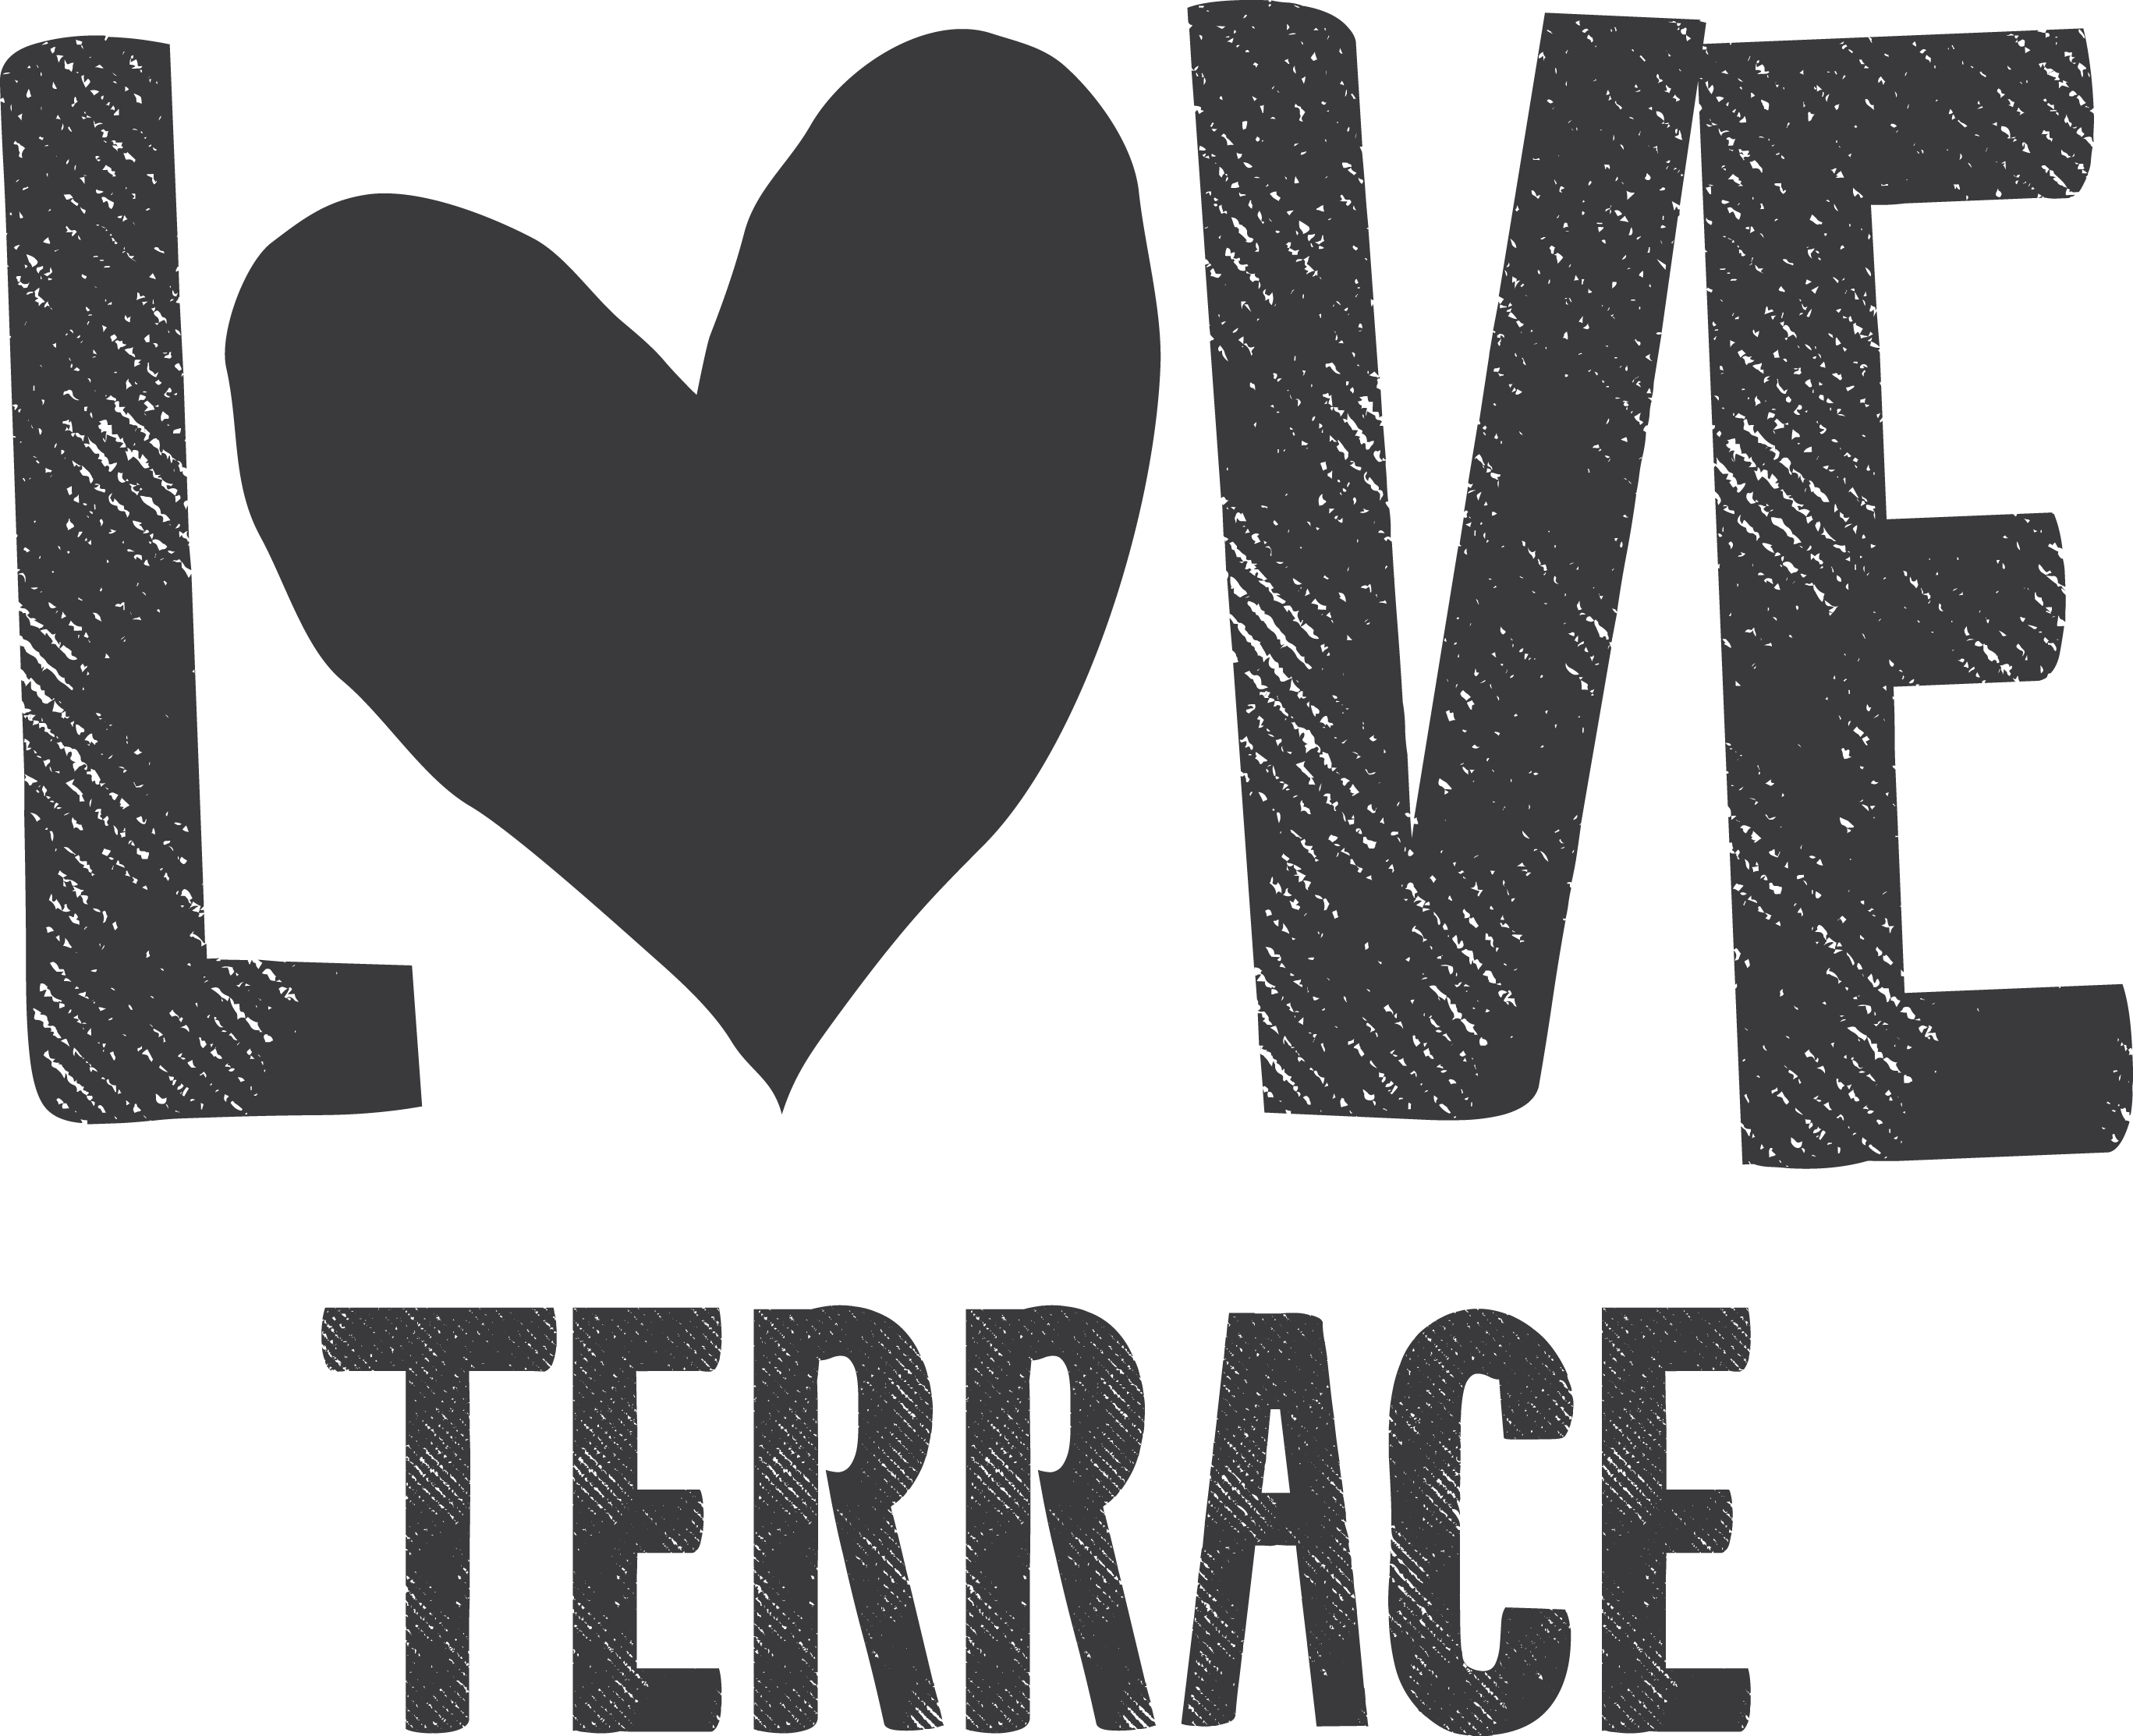 https://lovenorthernbc.com/community/terrace/